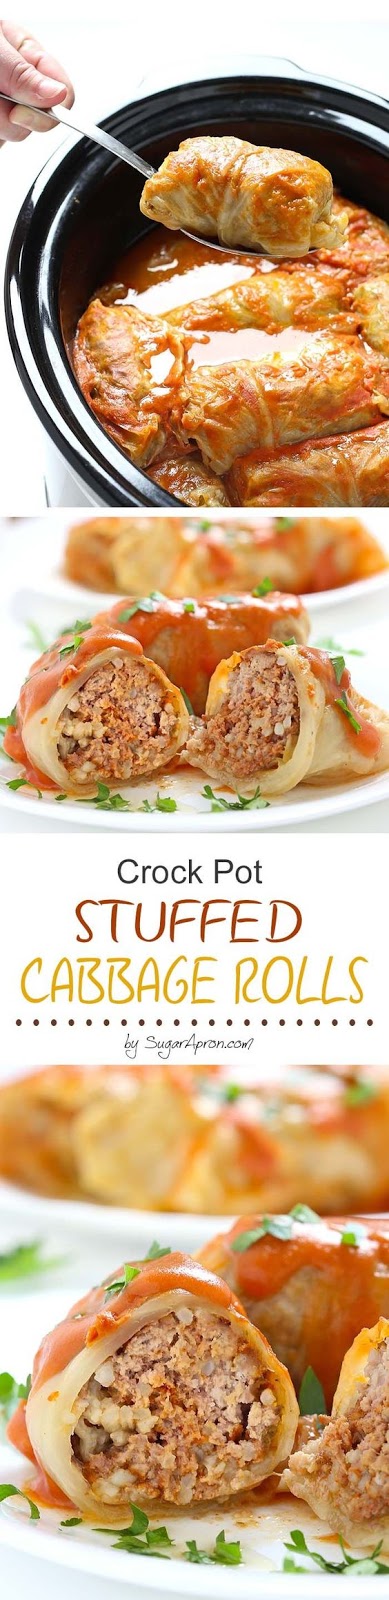 Best Crock Pot Stuffed Cabbage Rolls